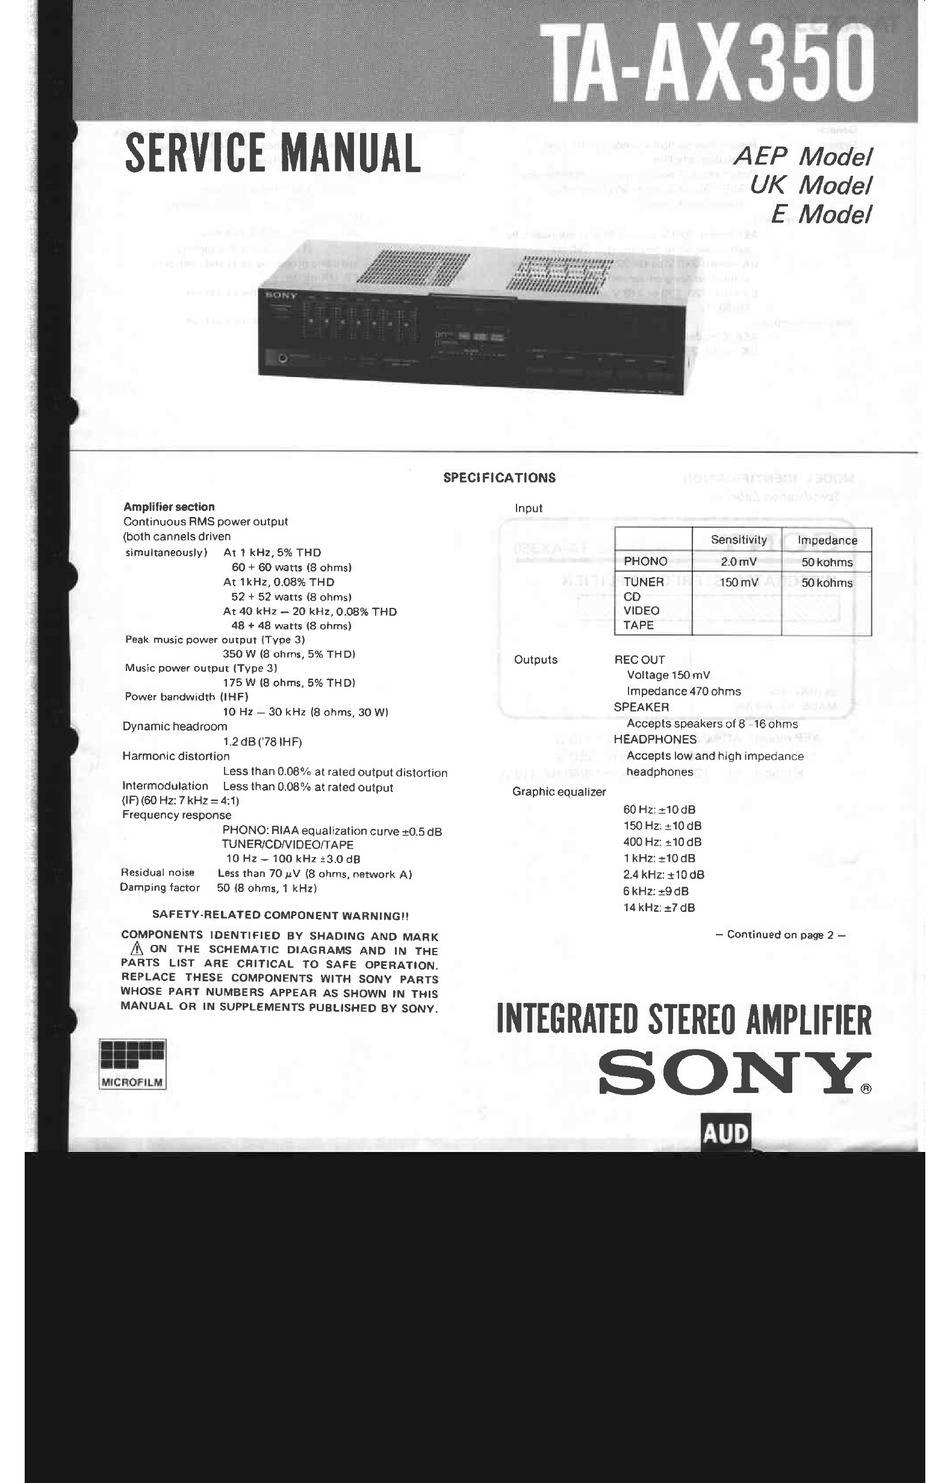 Sony TA-AX350